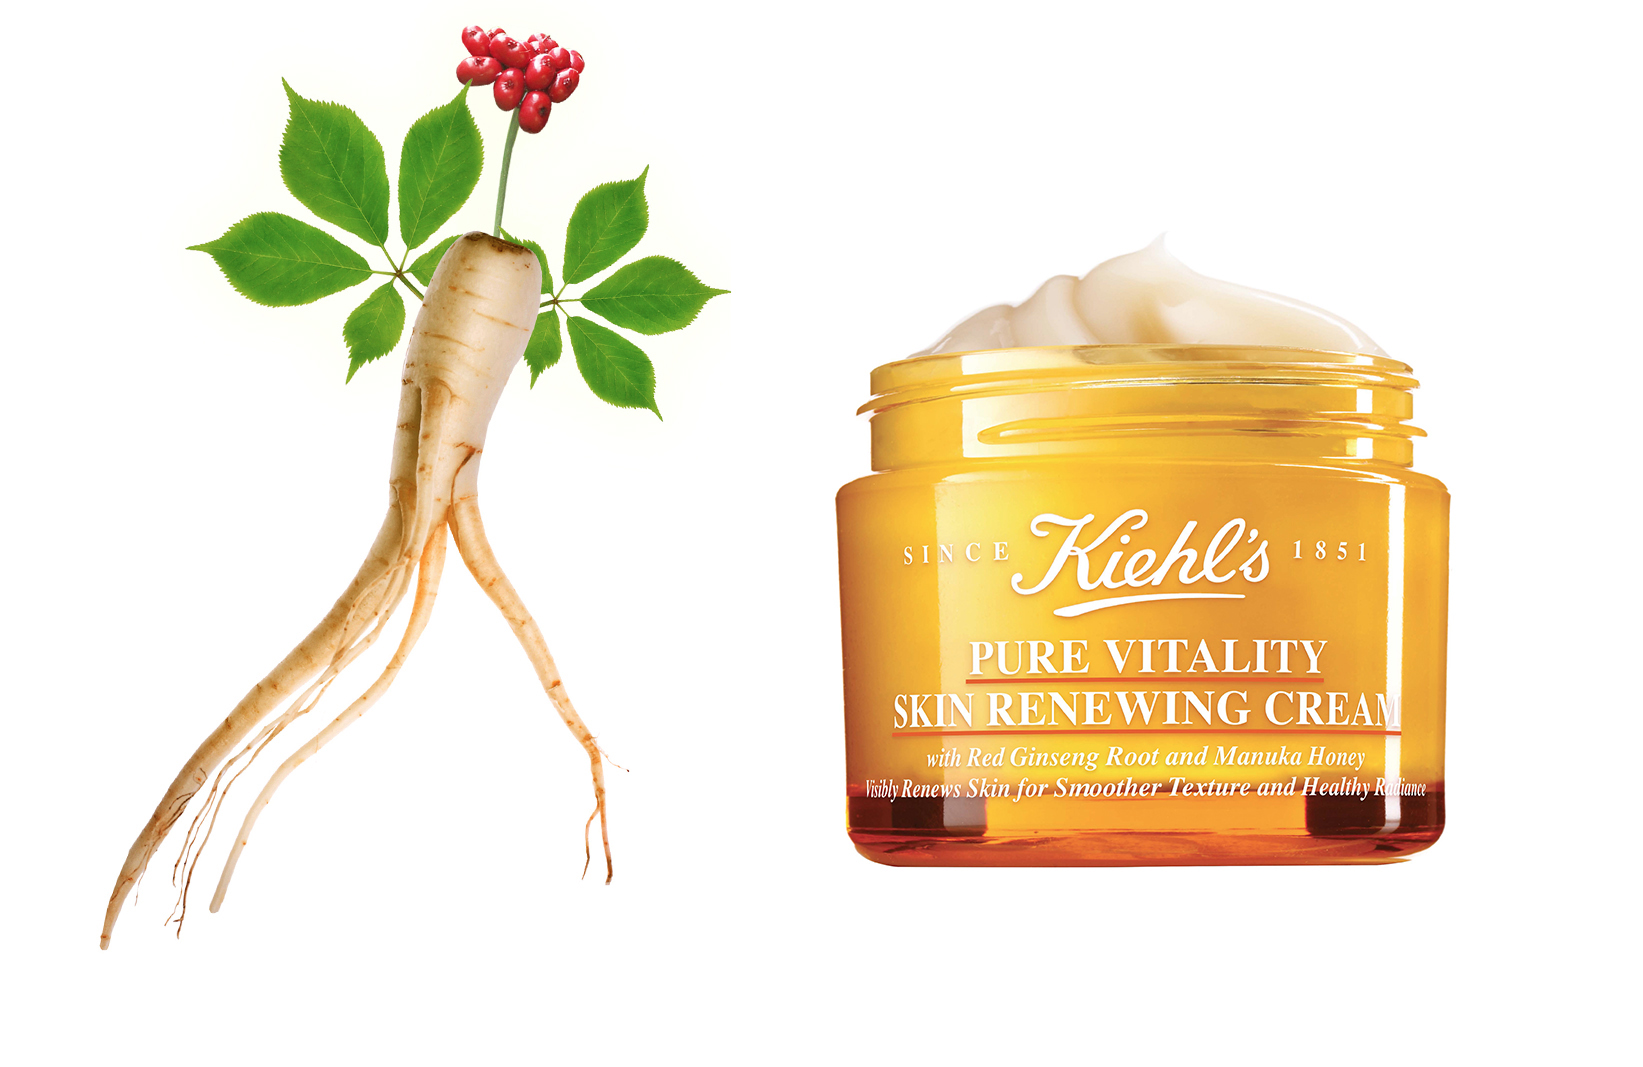 Pure Vitality Renewing Cream. Kiehl's Pure Vitality Skin Renewing Cream